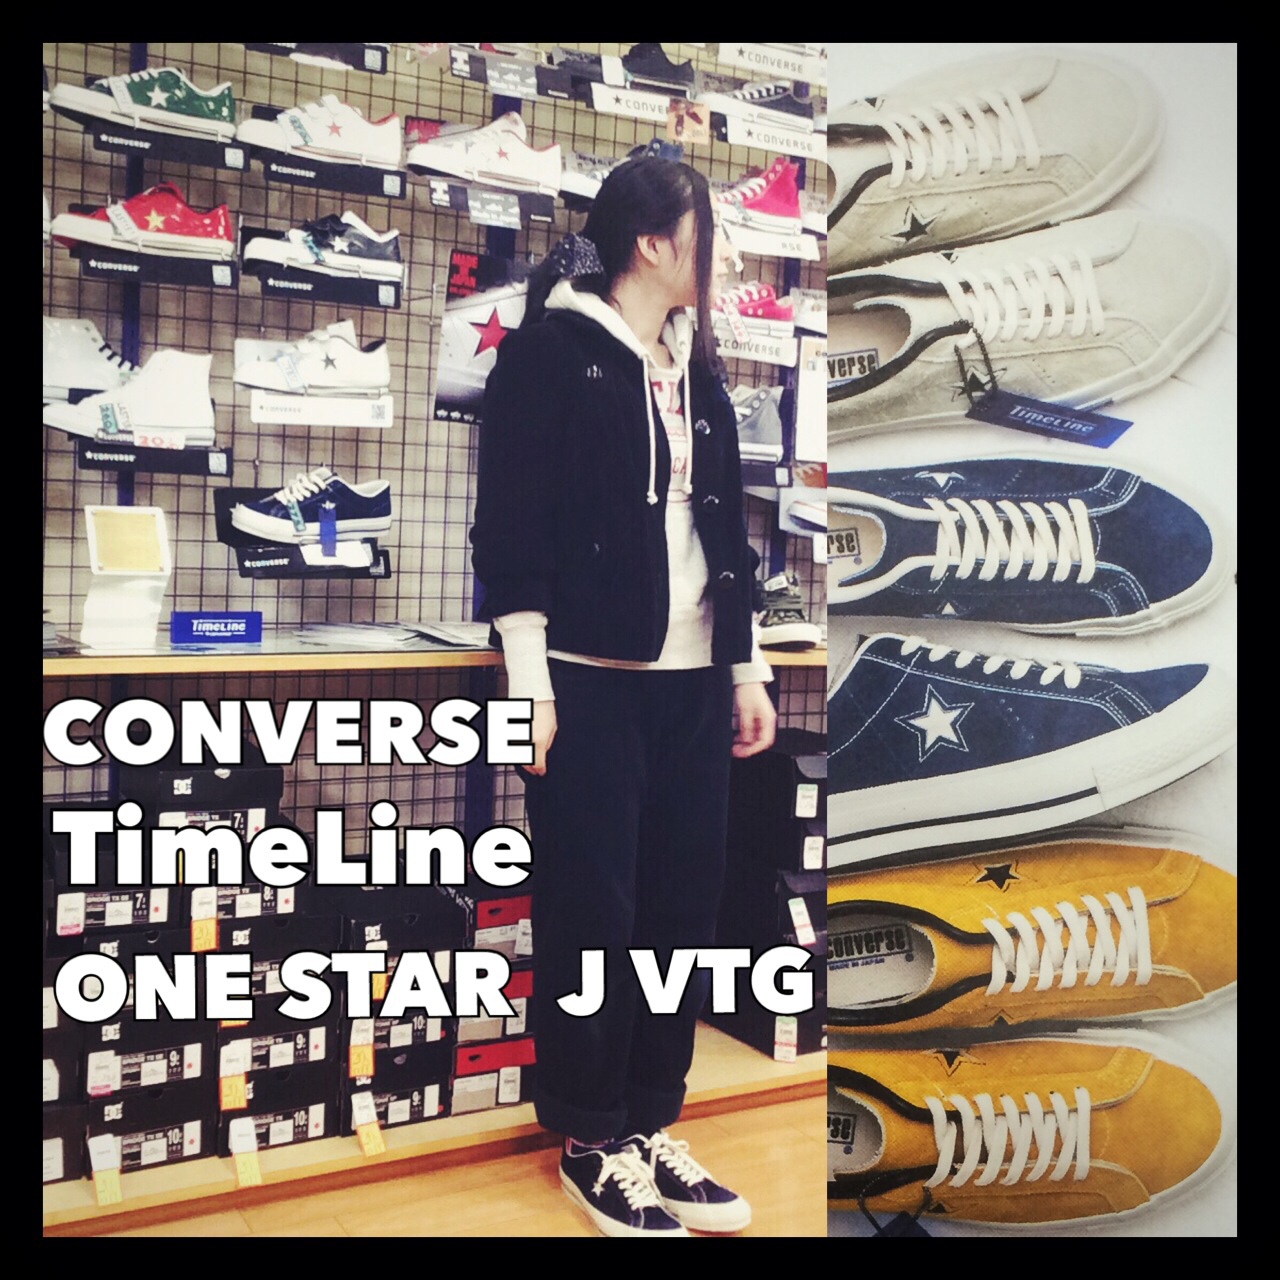 CONVERSE TIME LINE ONE STAR J VTG